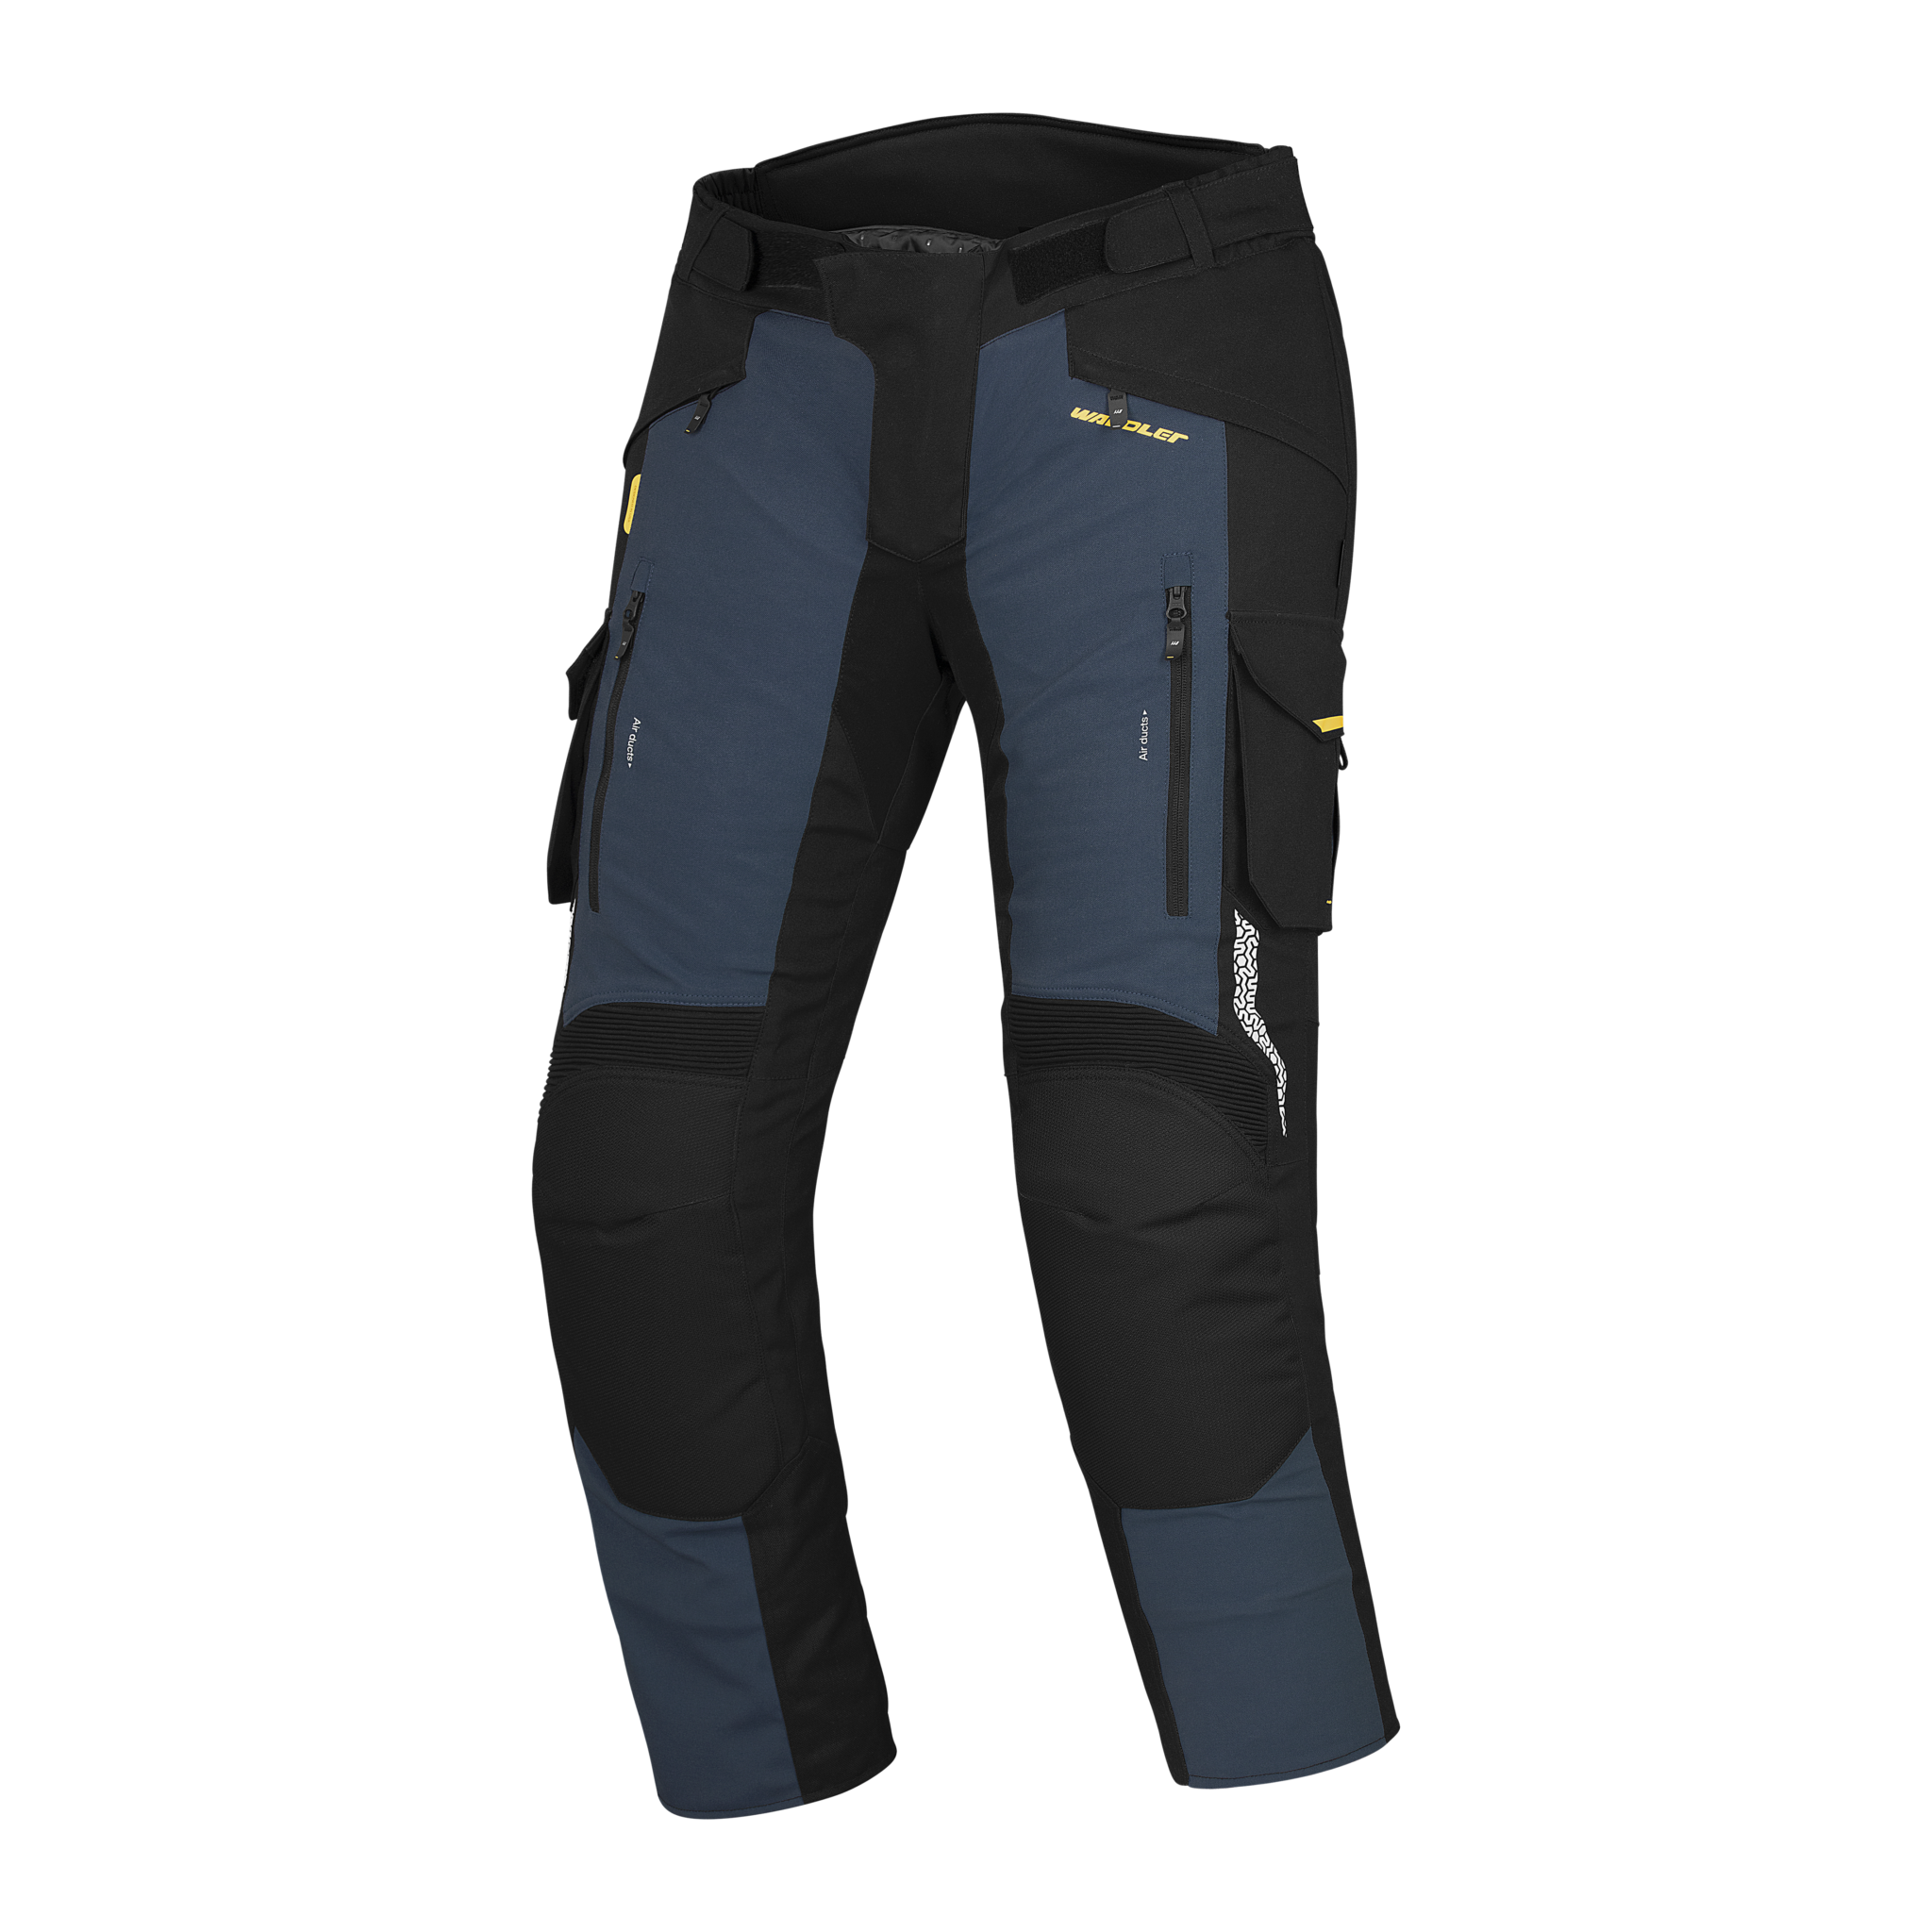 Wardler Bronco Adventure Motorcycle Pants, Black-Blue Front View